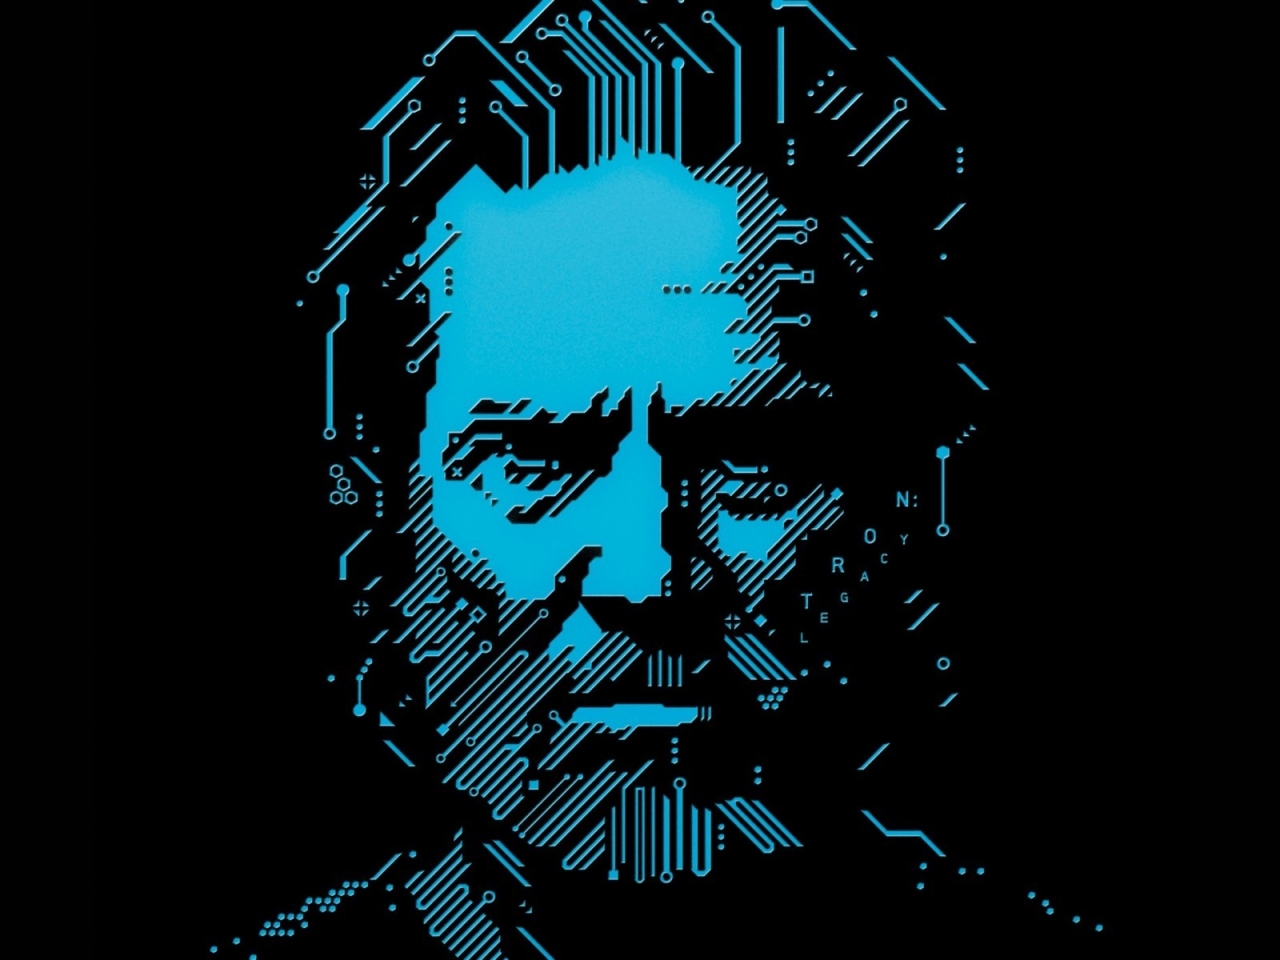 Jeff Bridges for 1280 x 960 resolution